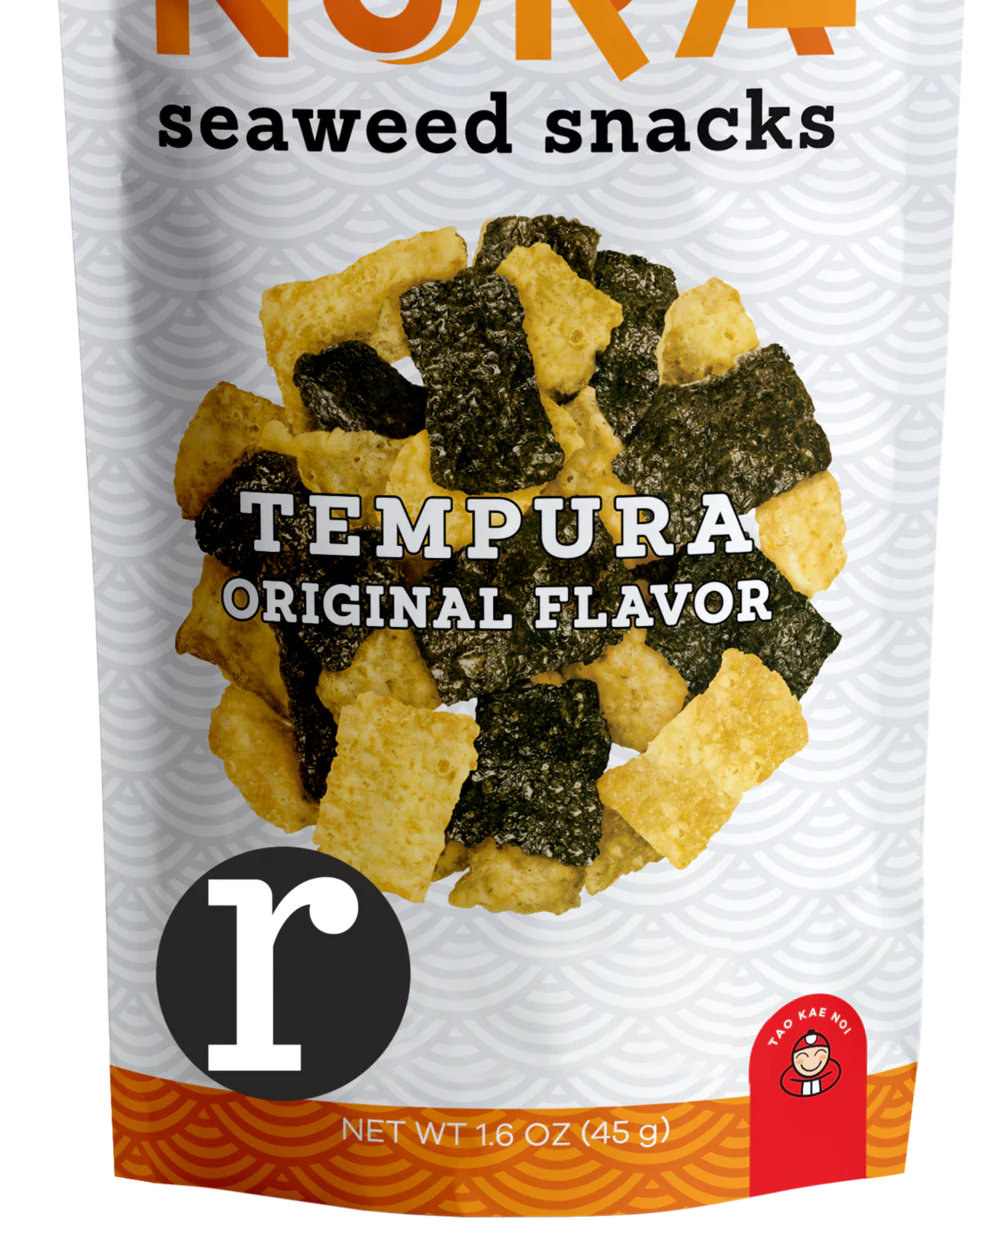 A bag of Tempura original Flavor Nora Seaweed Snacks